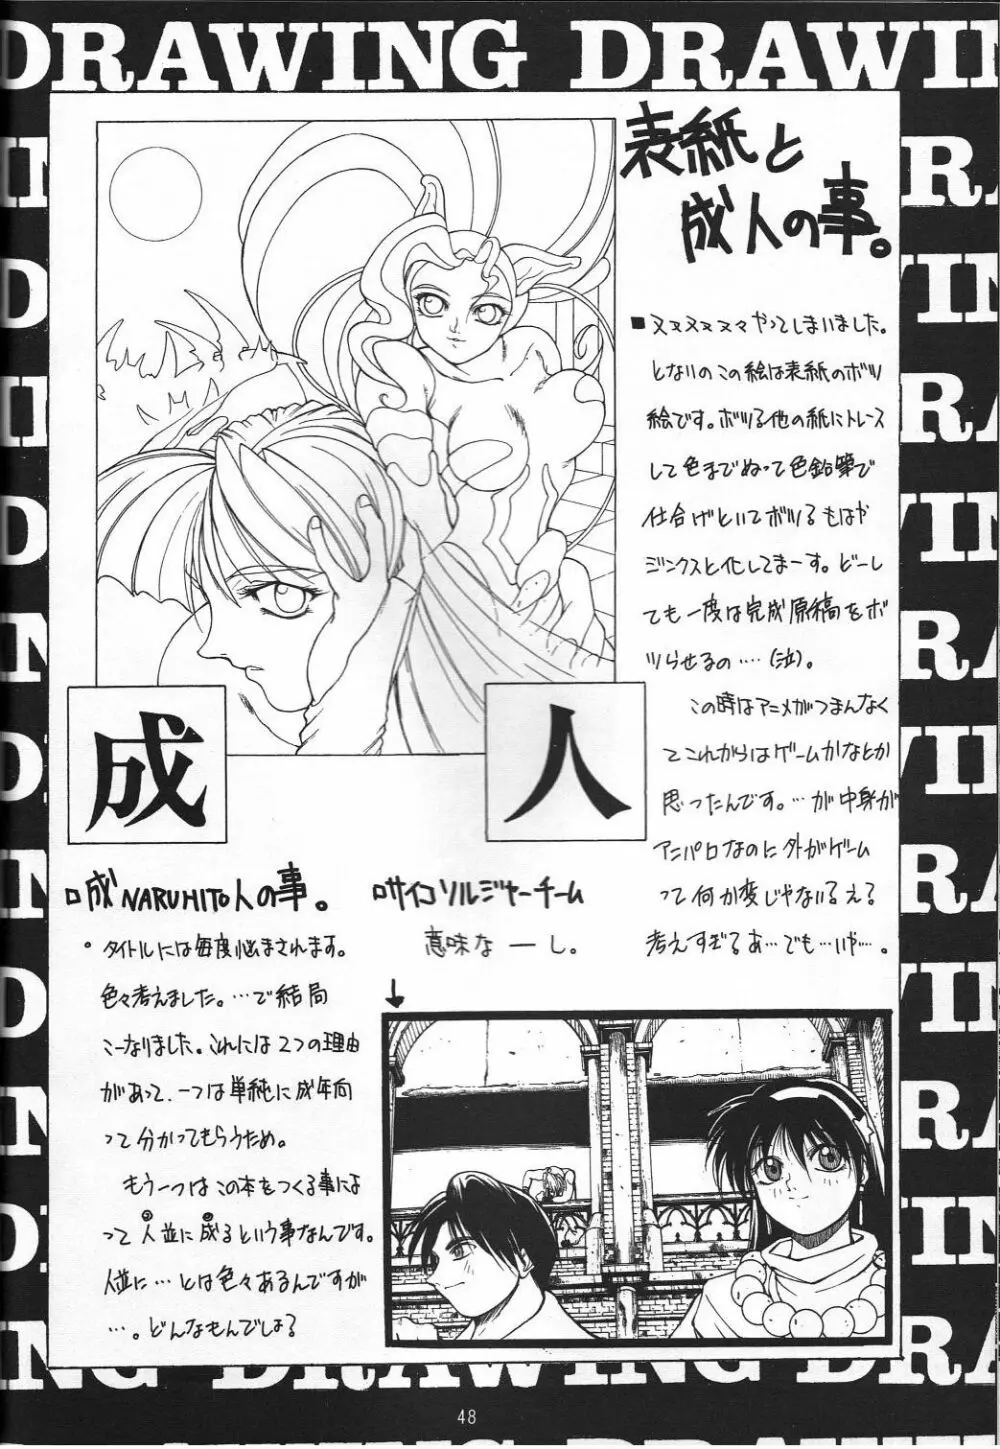 Naruhito Since 1992 Page.49